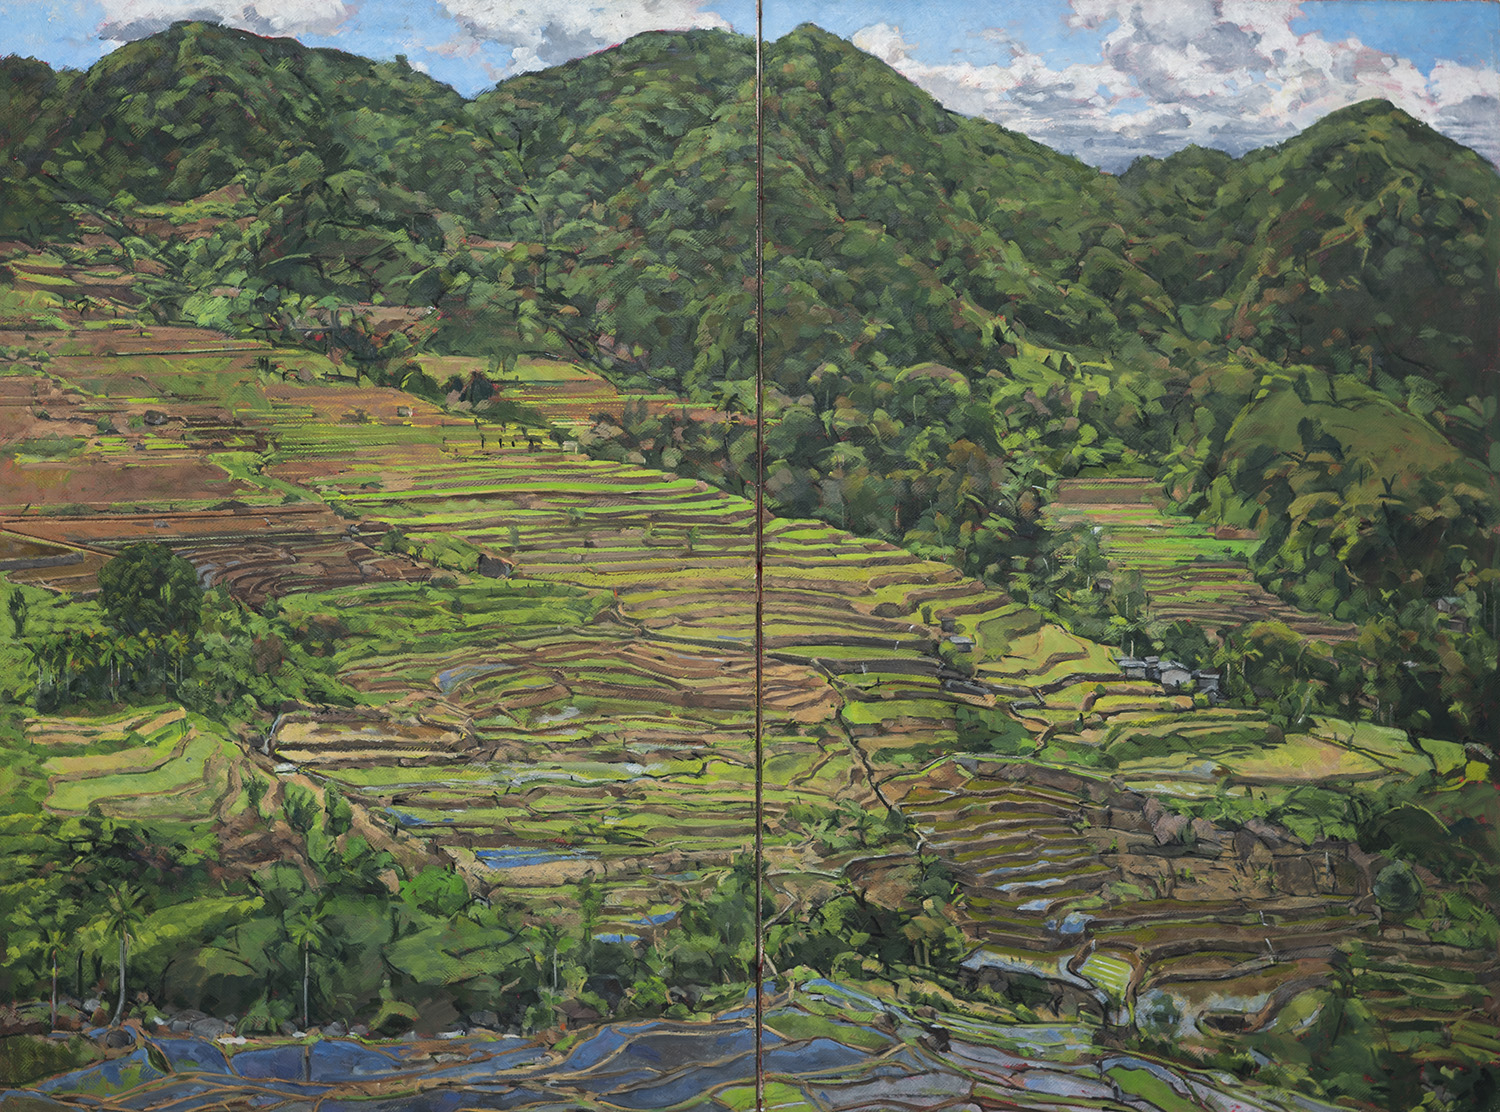 Nagacadan rice terraces by Frederick Ortner (larger)